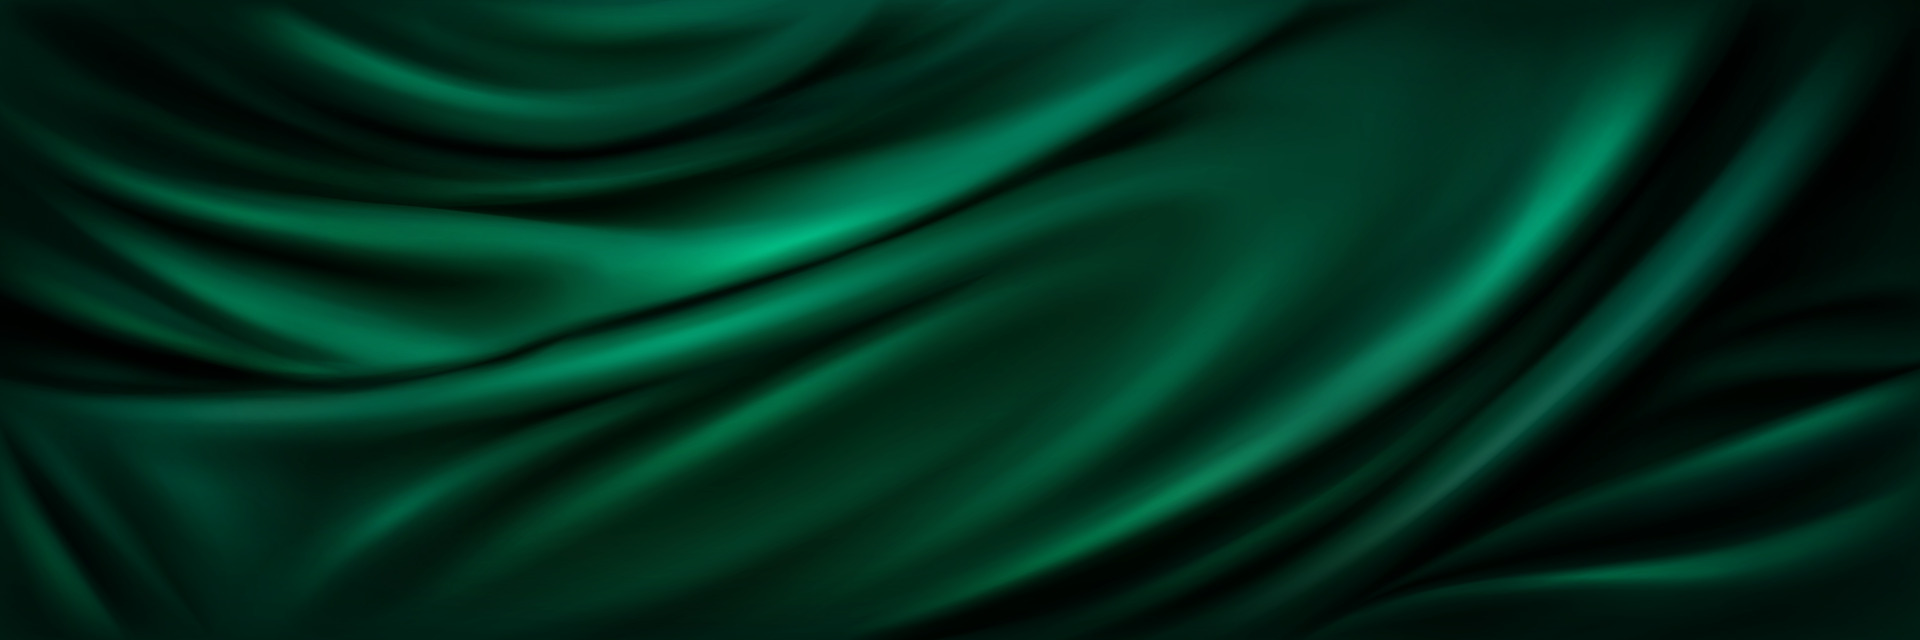 Green silk fabric background, satin cloth texture 24233364 Vector Art ...